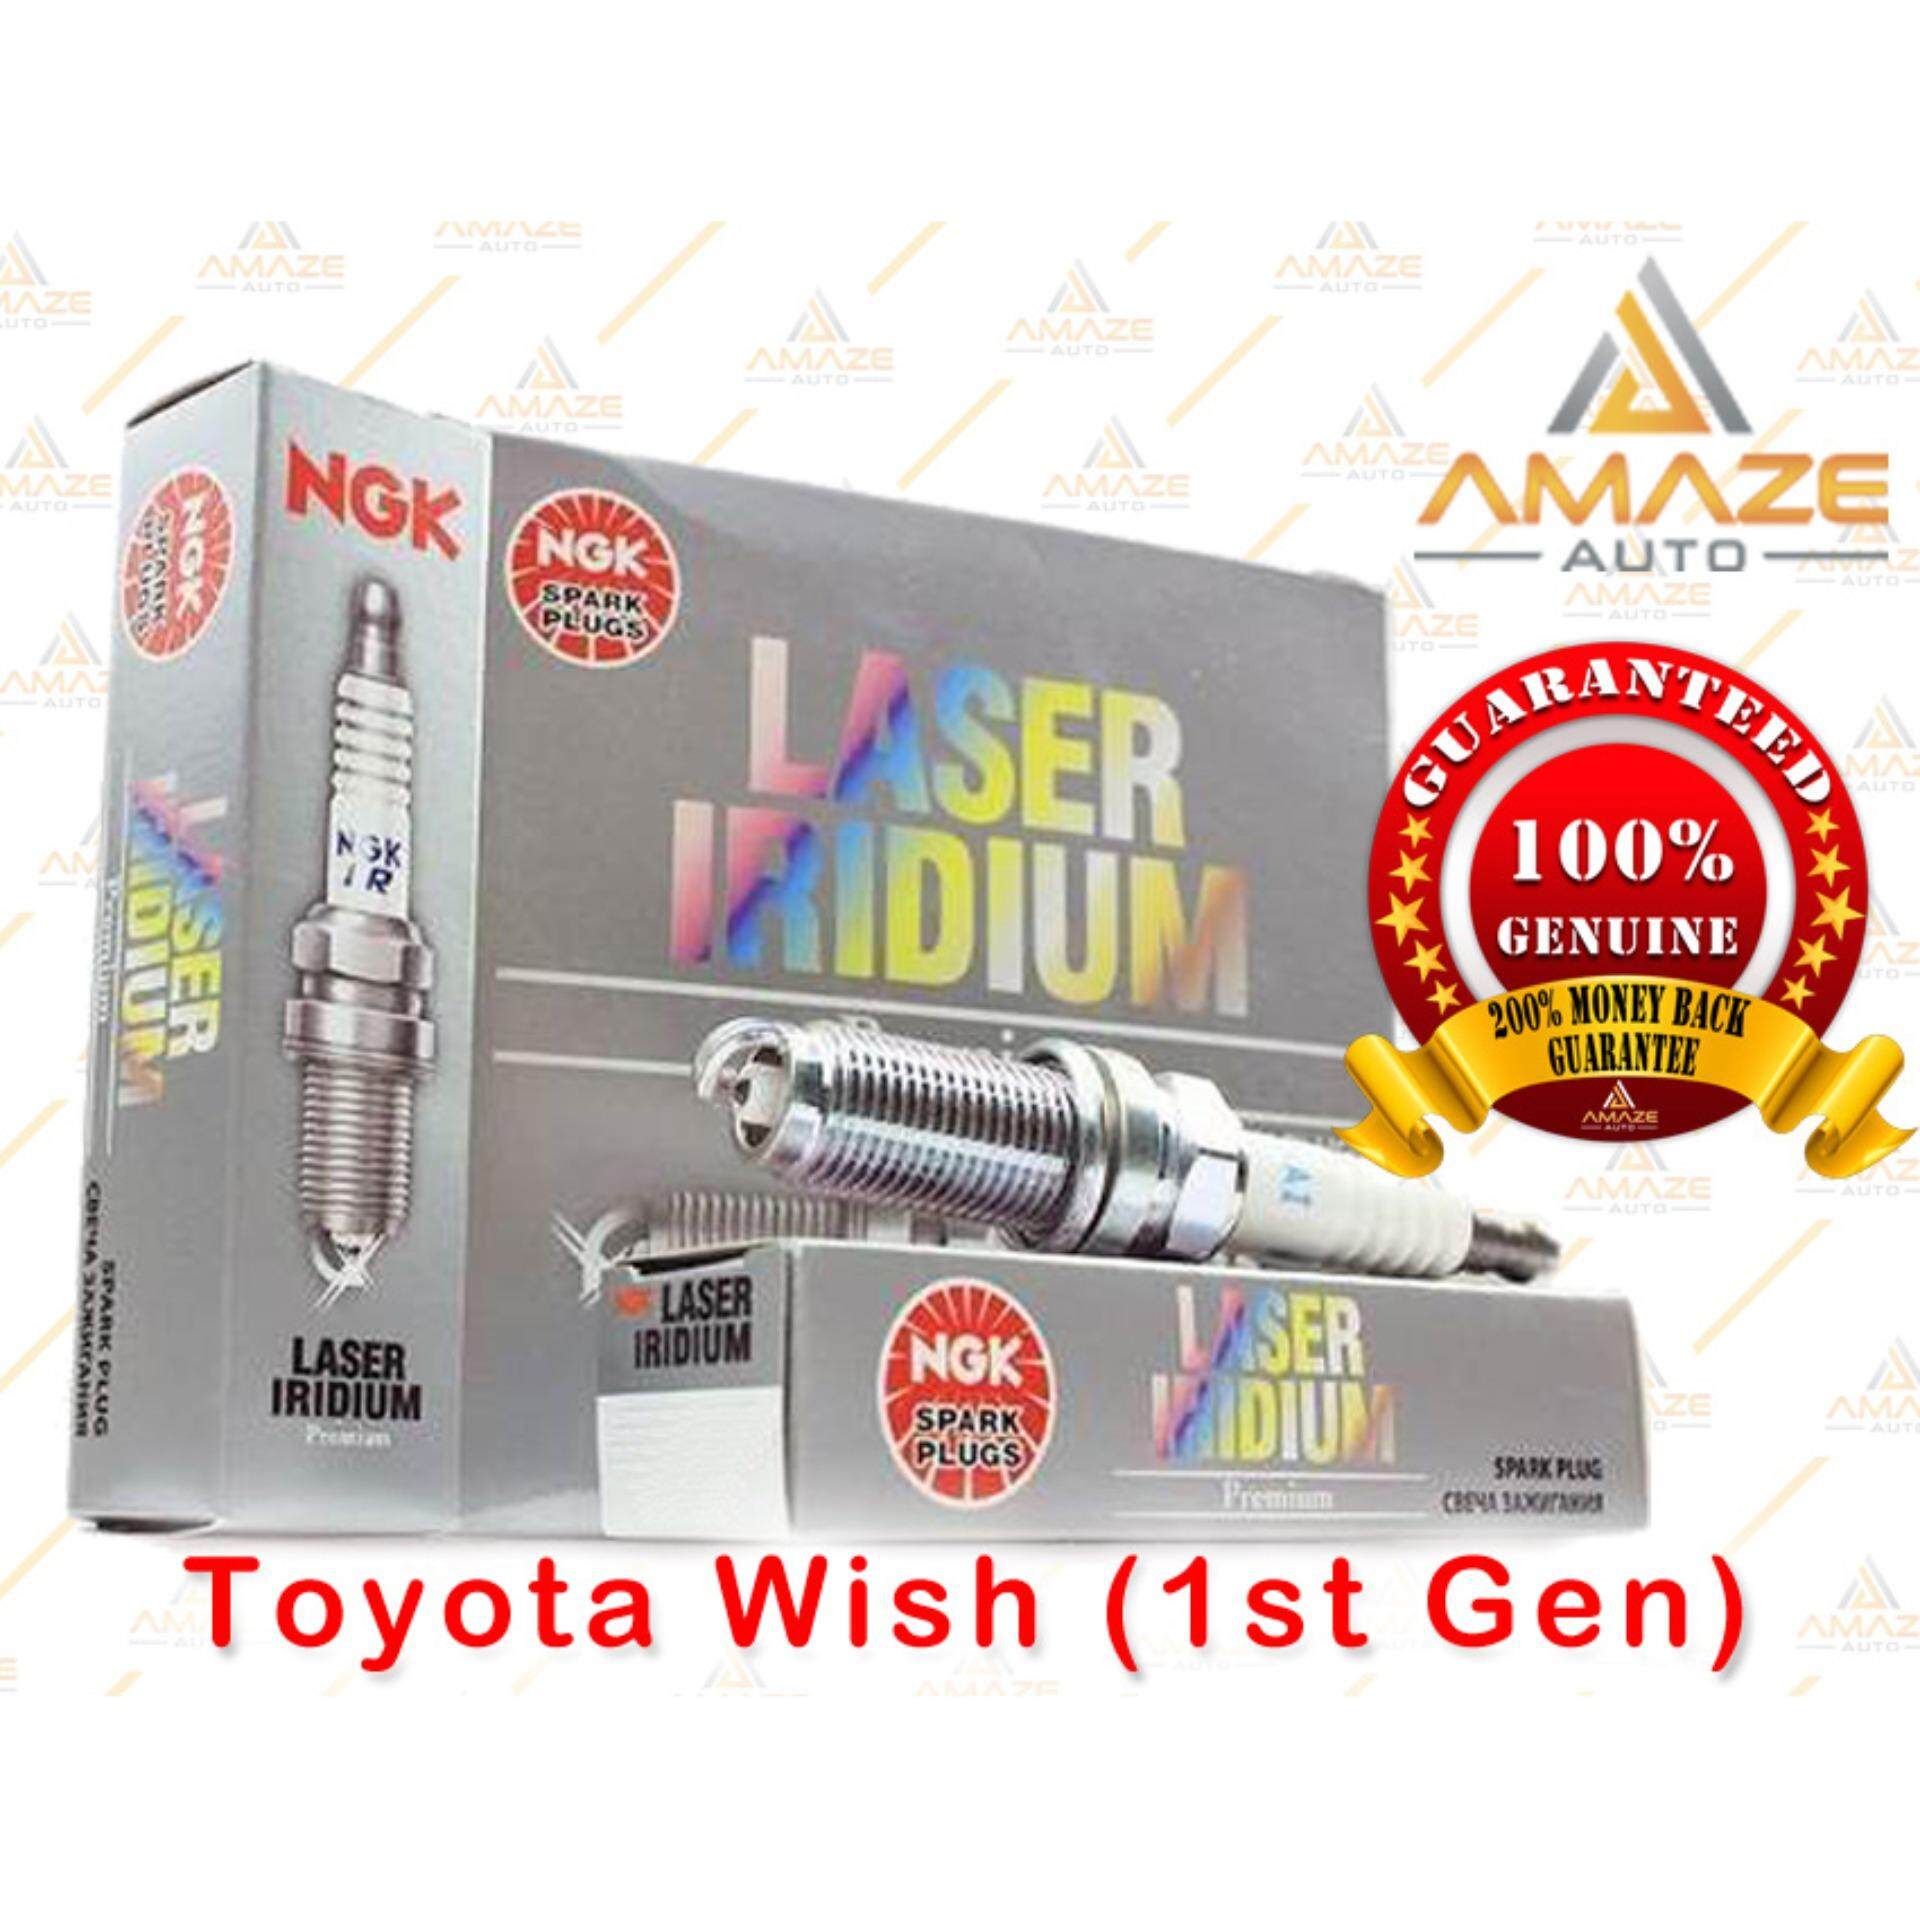 NGK Laser Iridium Spark Plug for Toyota Wish (1st Gen)